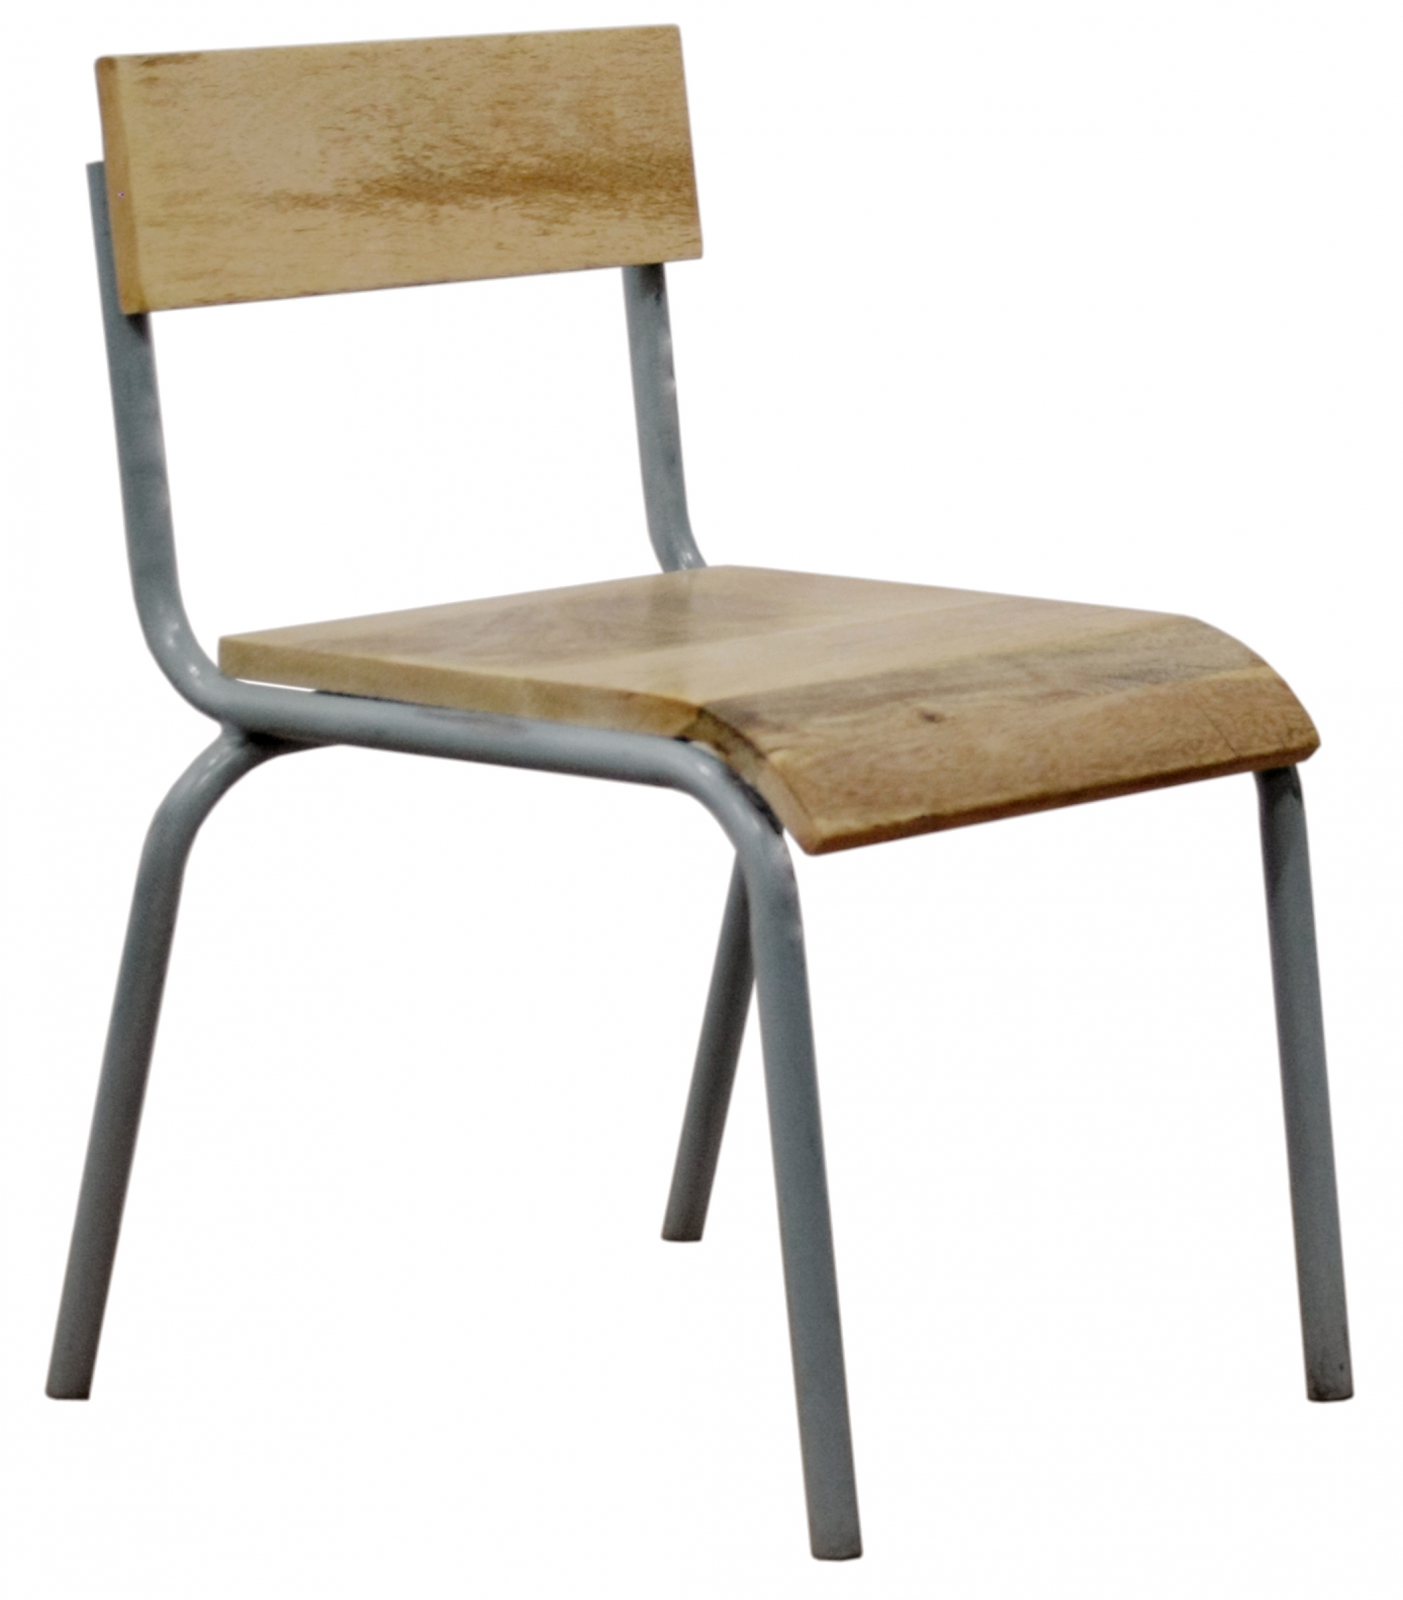 KidsDepot Original Chair (2 pieces)